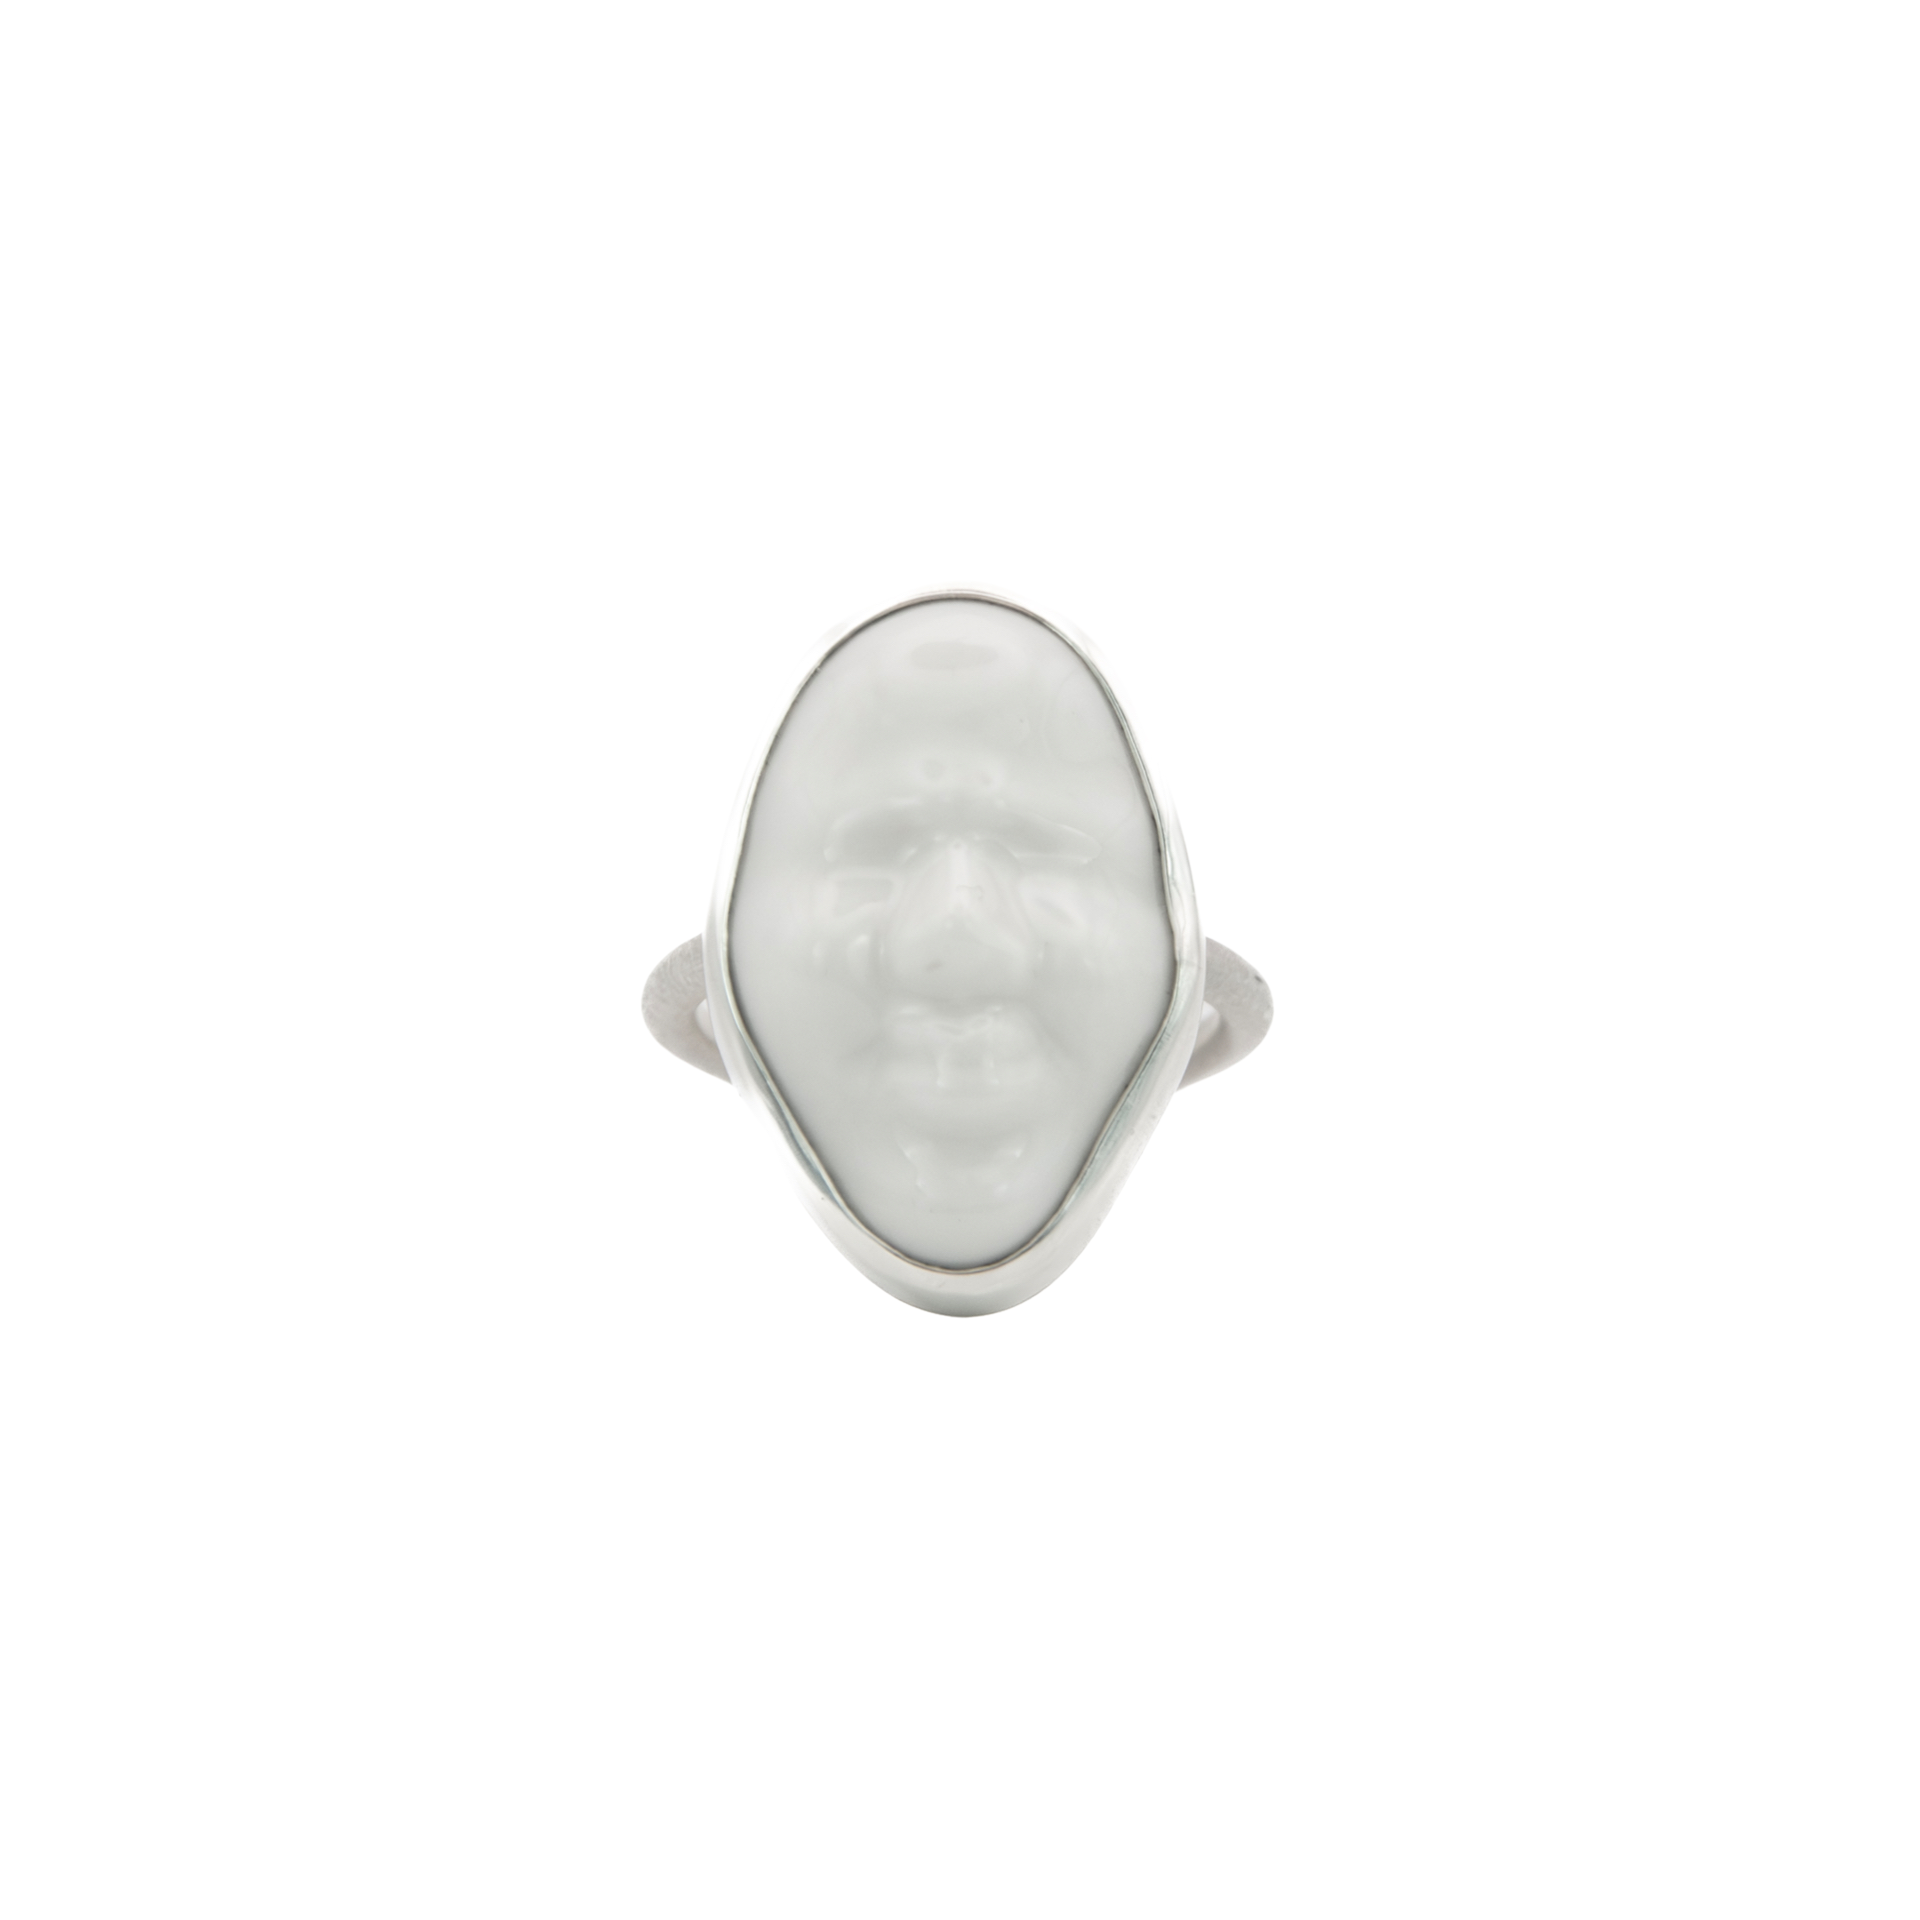 Caiyang Yin Social Mask White Ring